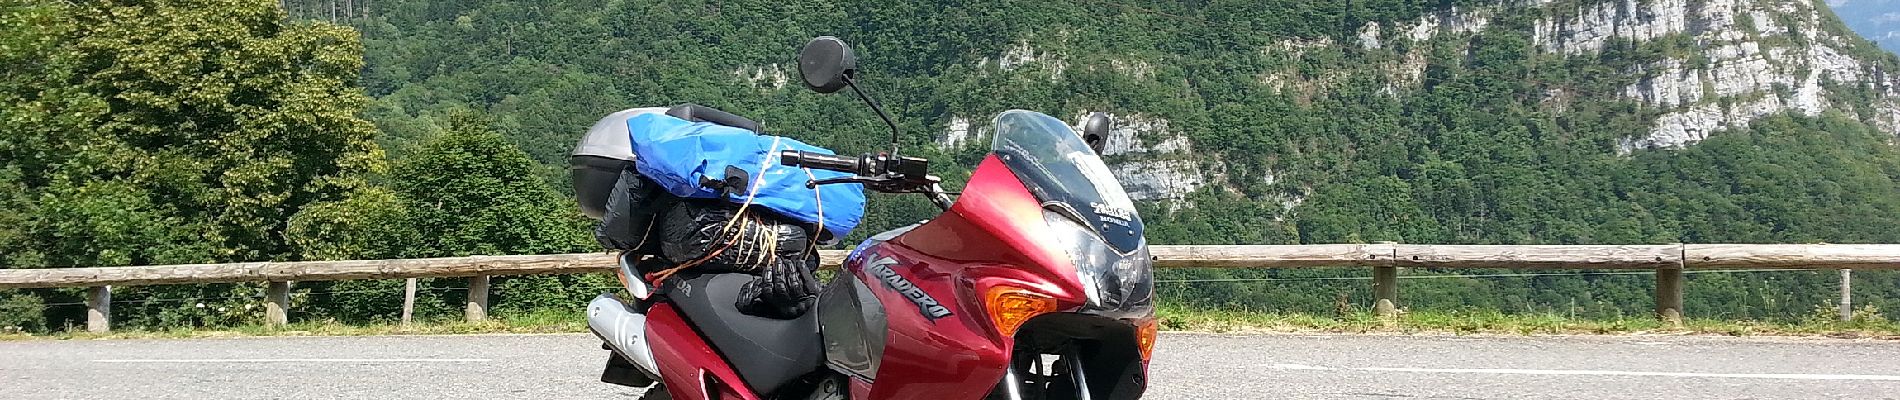 Excursión Moto Die - GTA 2018 - ETAPE 9 - Photo